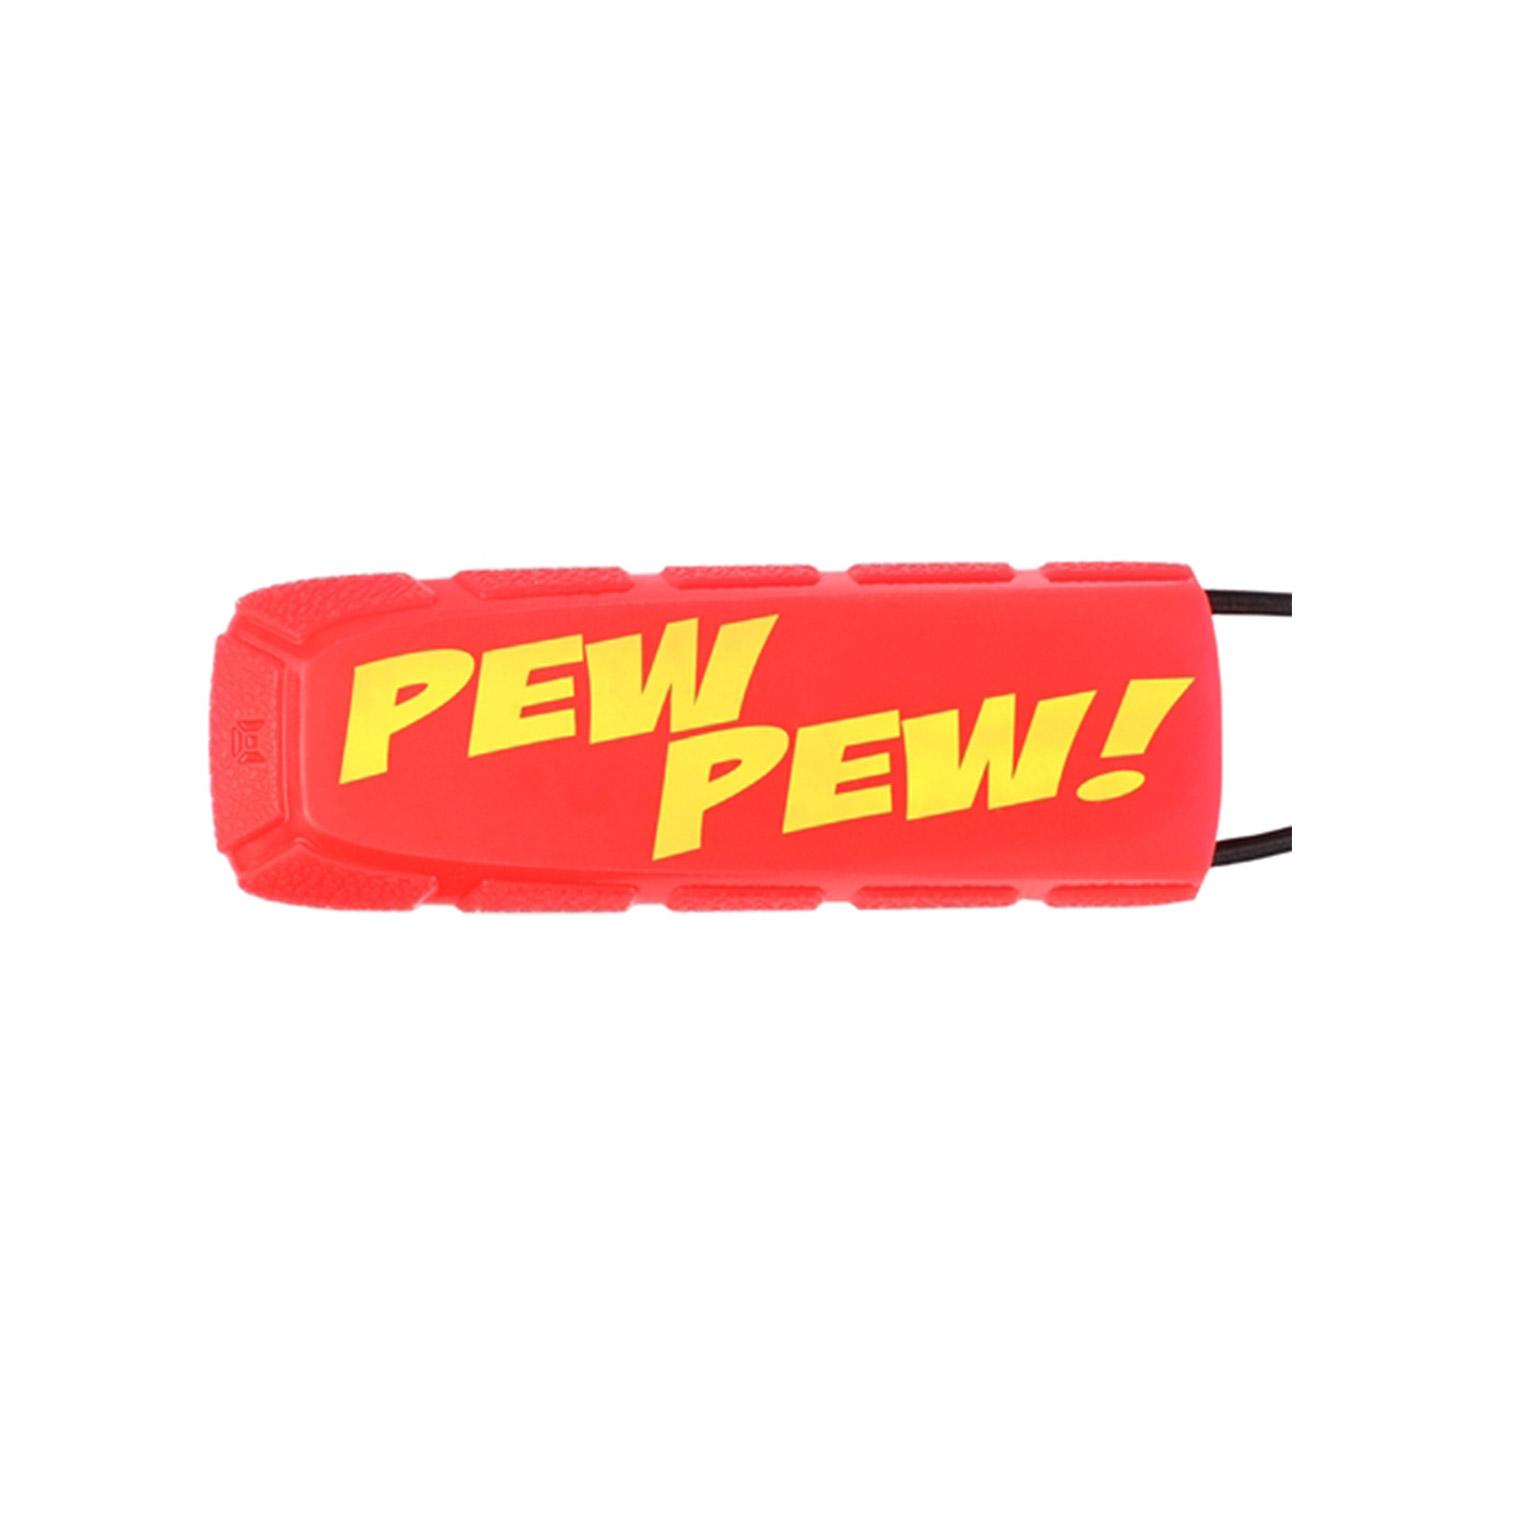 Exalt Bayonet Pew Pew Red Yellow